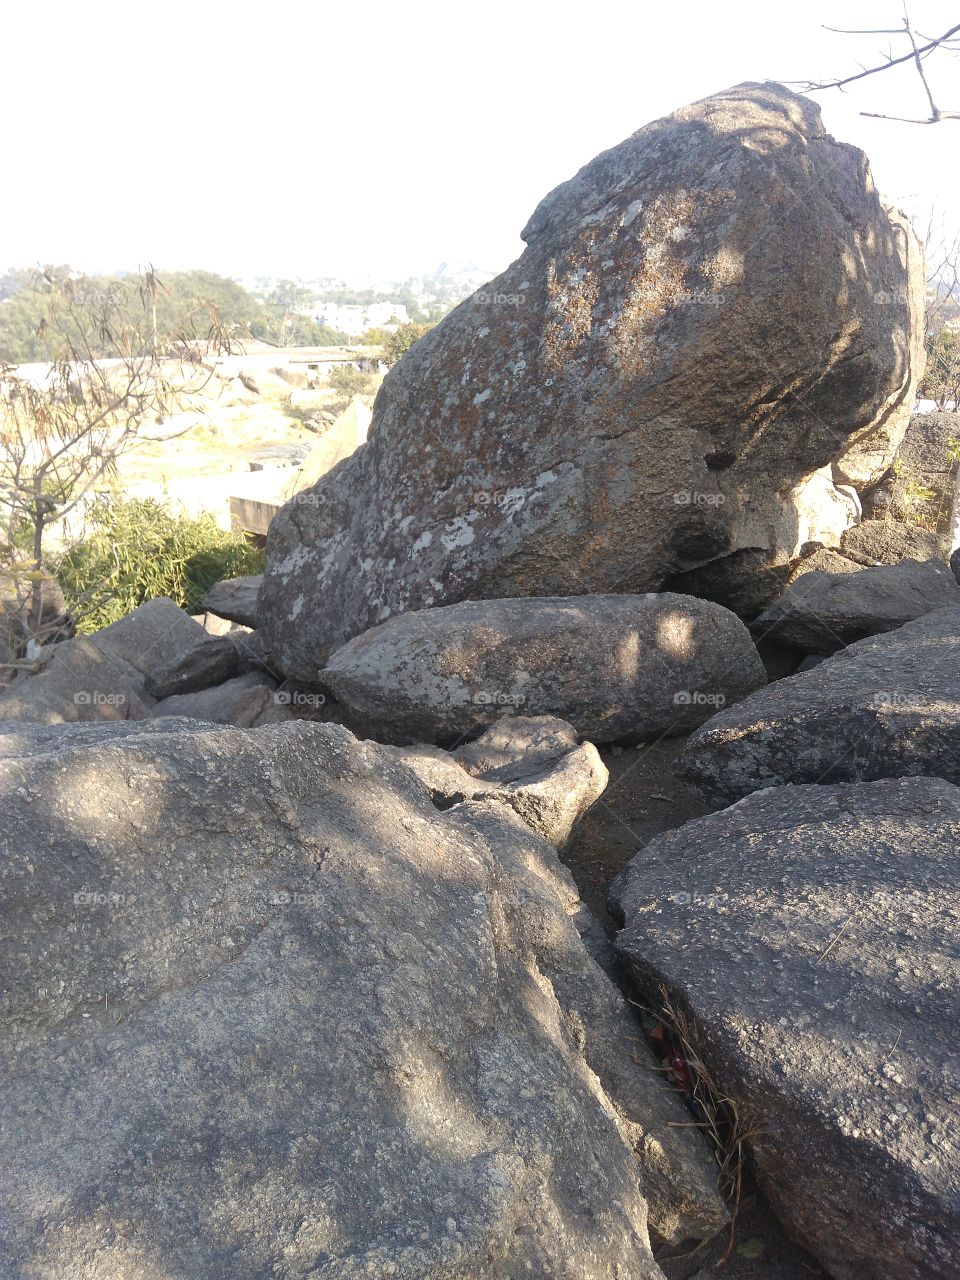 Rock Garden
Rocks